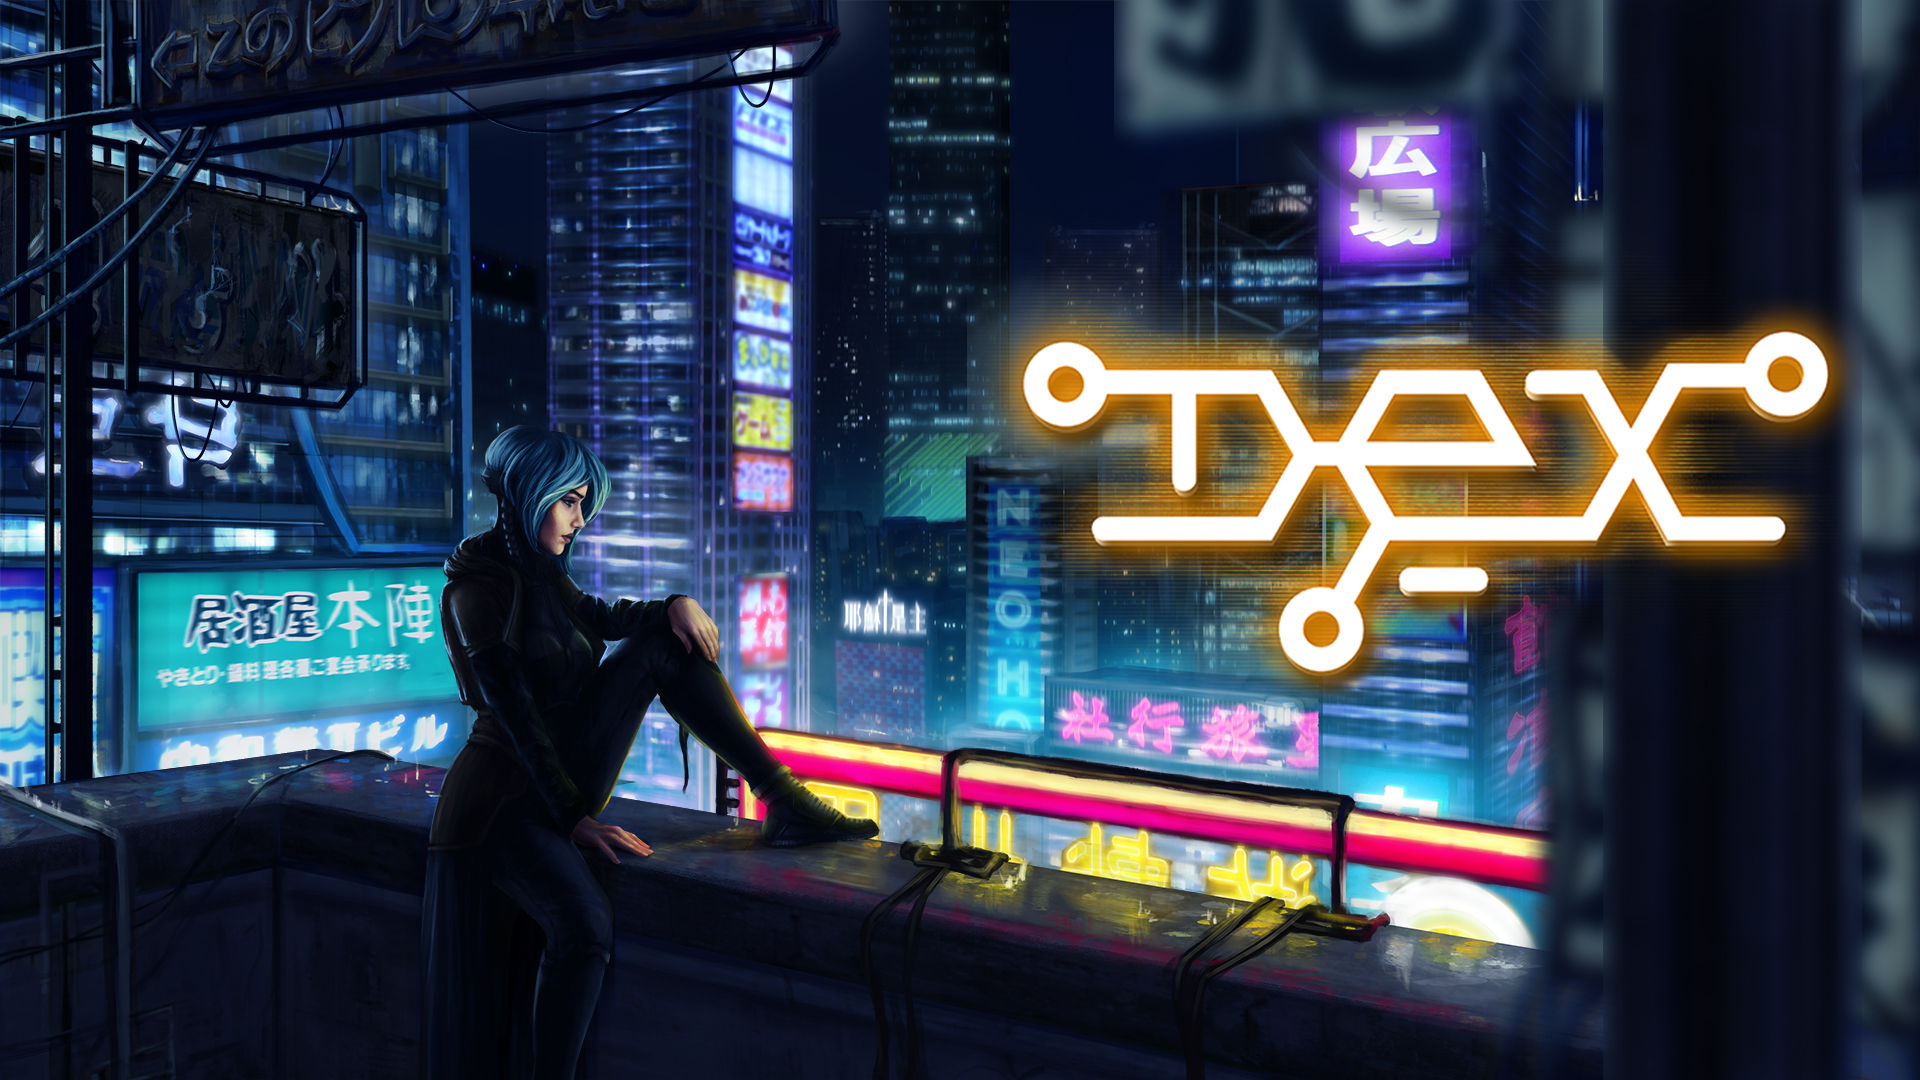 2D Cyberpunk Game Dex Launches This Month - Nintendojo.